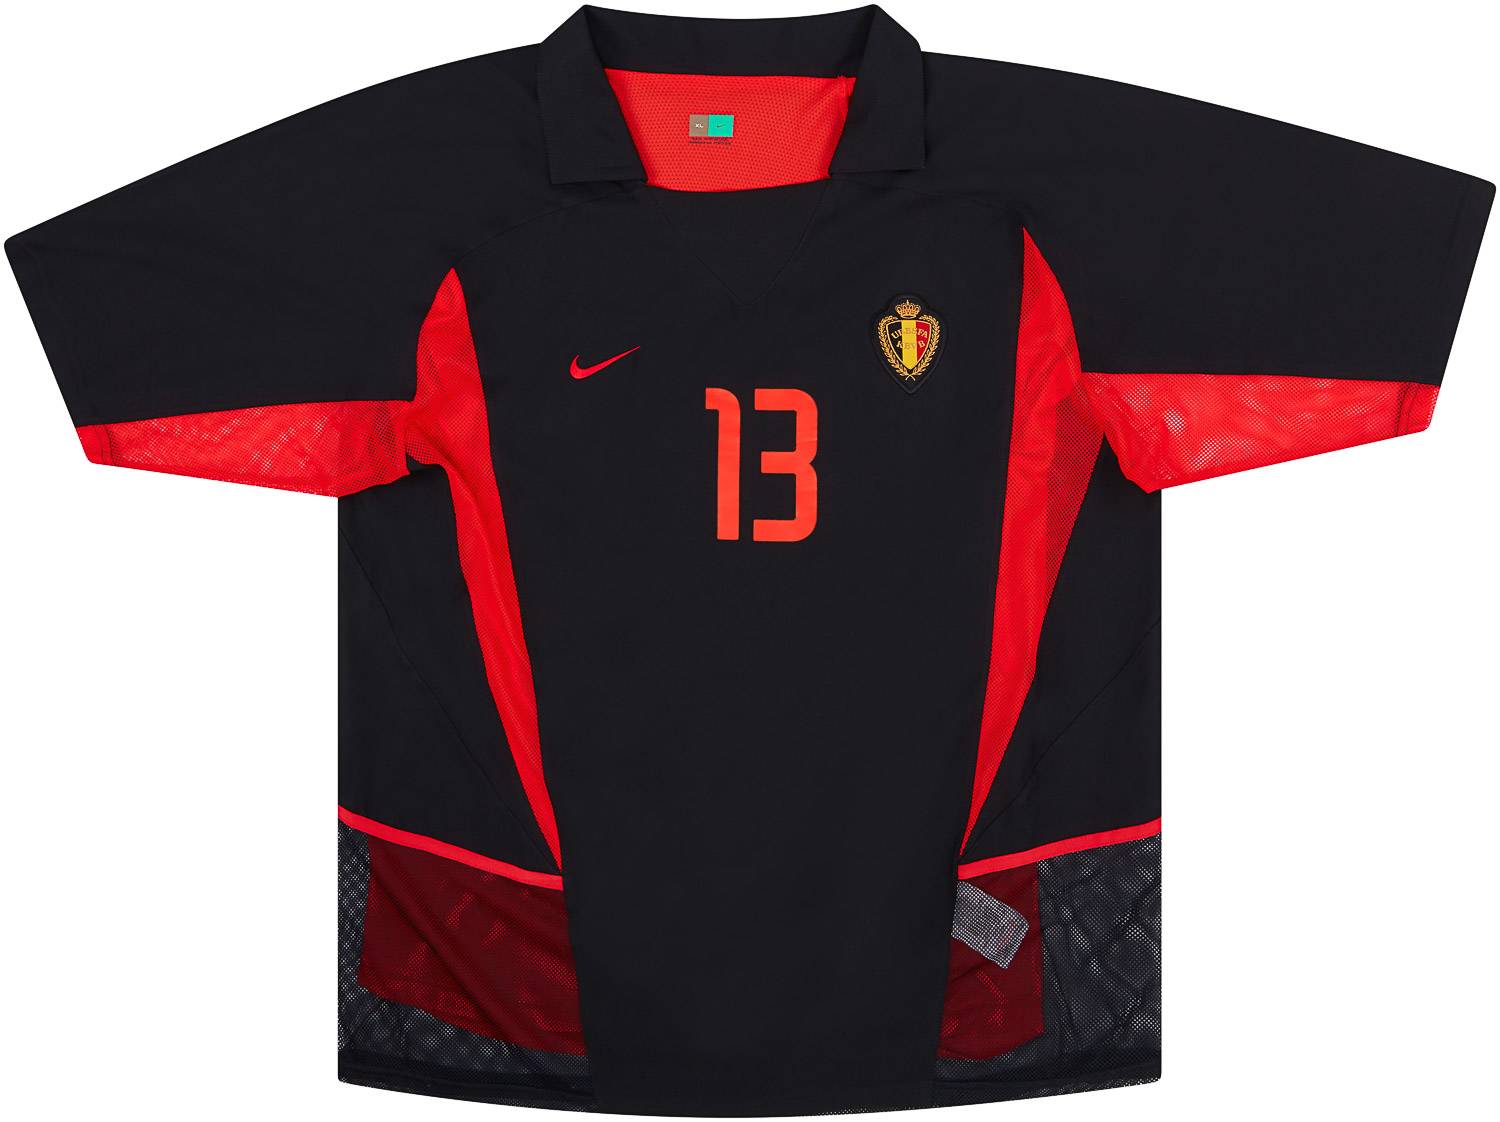 Set Flock Nameset away Trikot jersey shirt Belgien Belgium Belgique 2002 